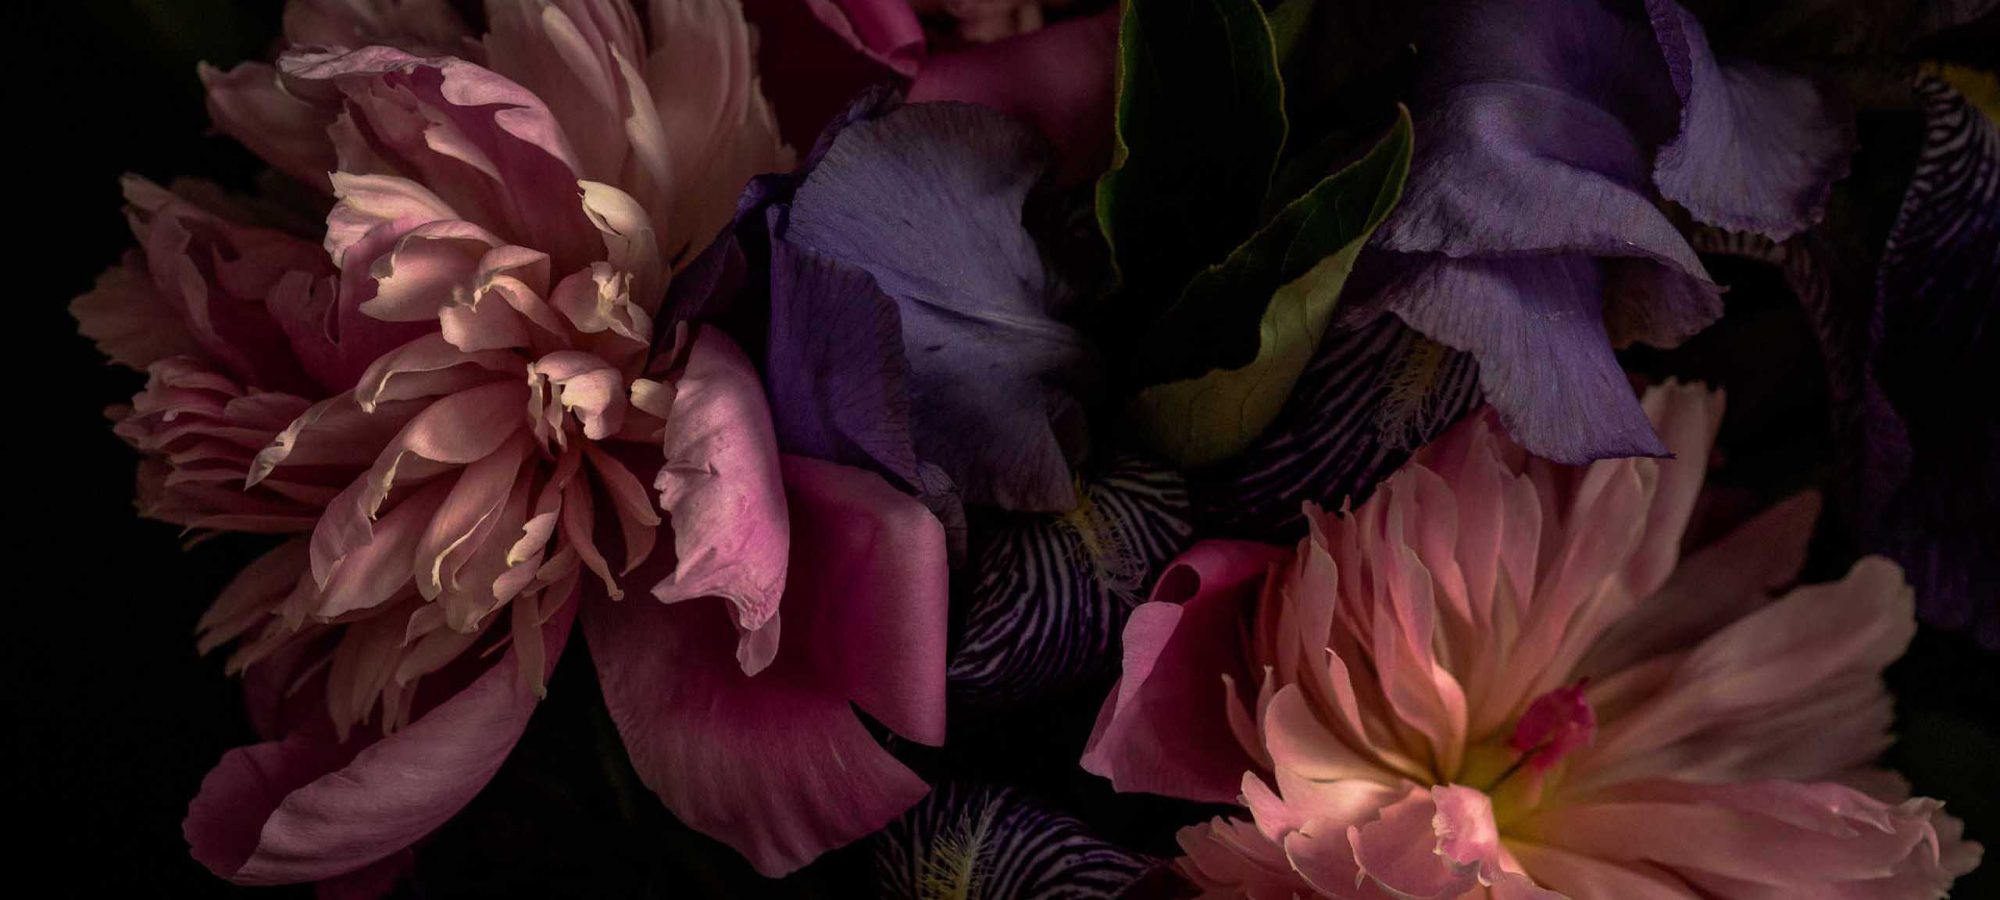 Dark-toned photo of bouquet